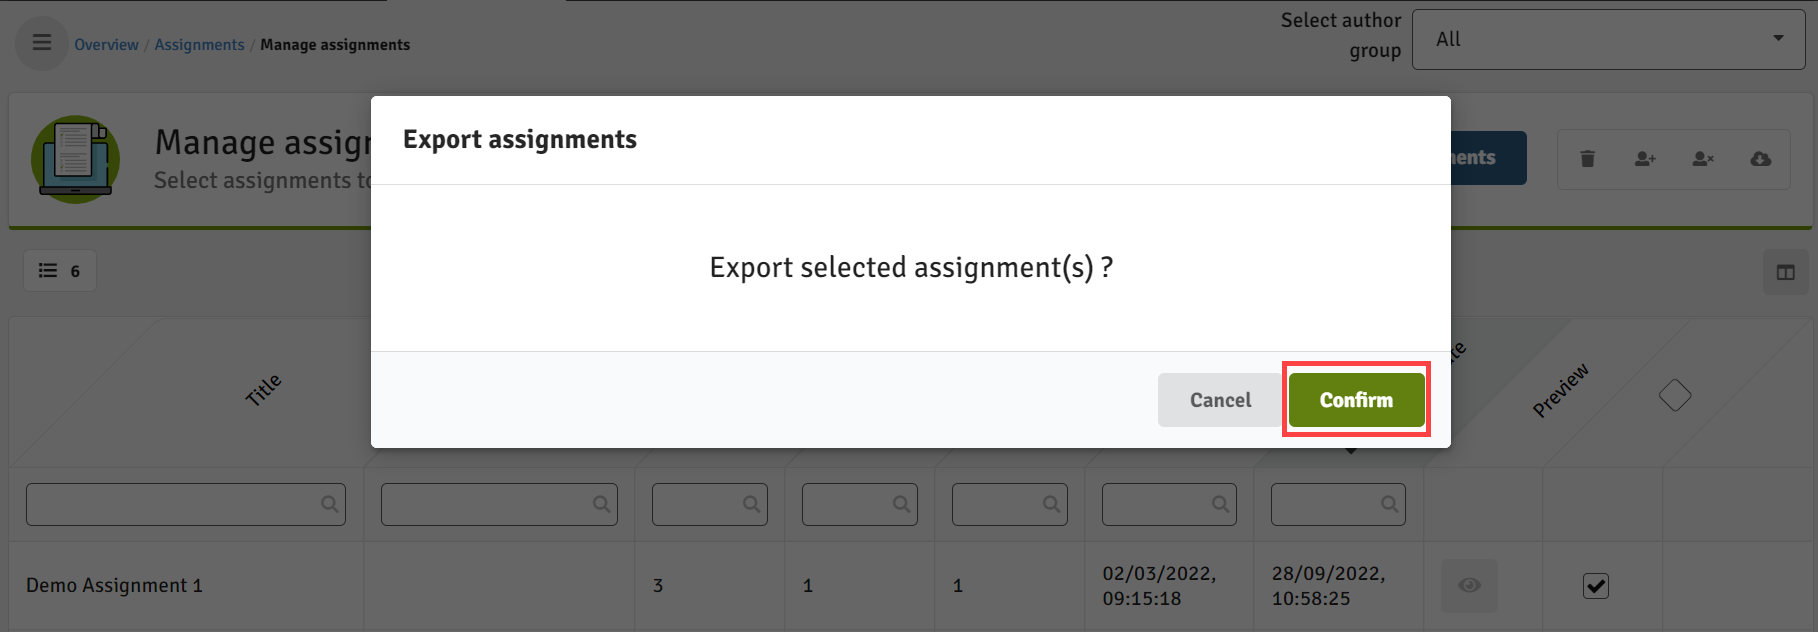 Confirm_export_assignments.png